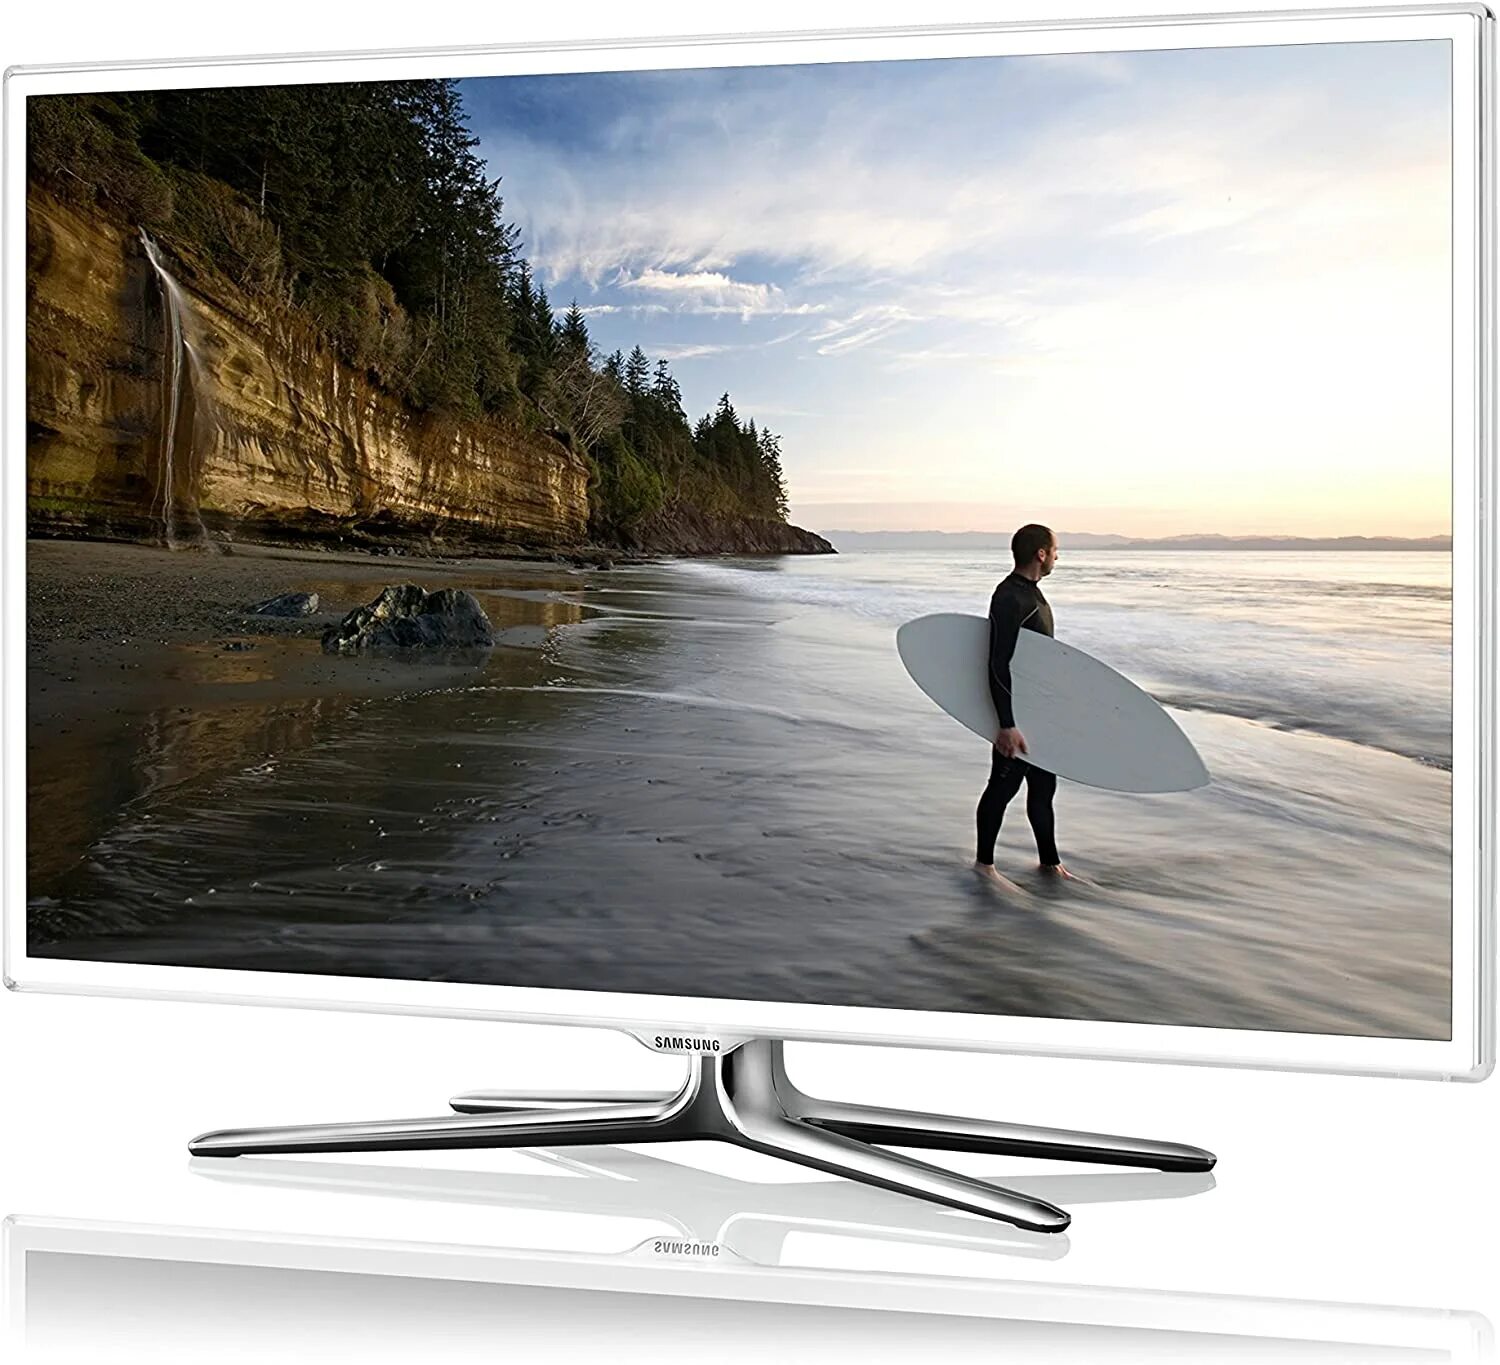 Купить телевизор с функцией. Samsung ue40es8000. Телевизор самсунг 46 дюйма смарт. Самсунг 32 дюйма смарт ТВ белый. Samsung 40 дюймов Smart TV.